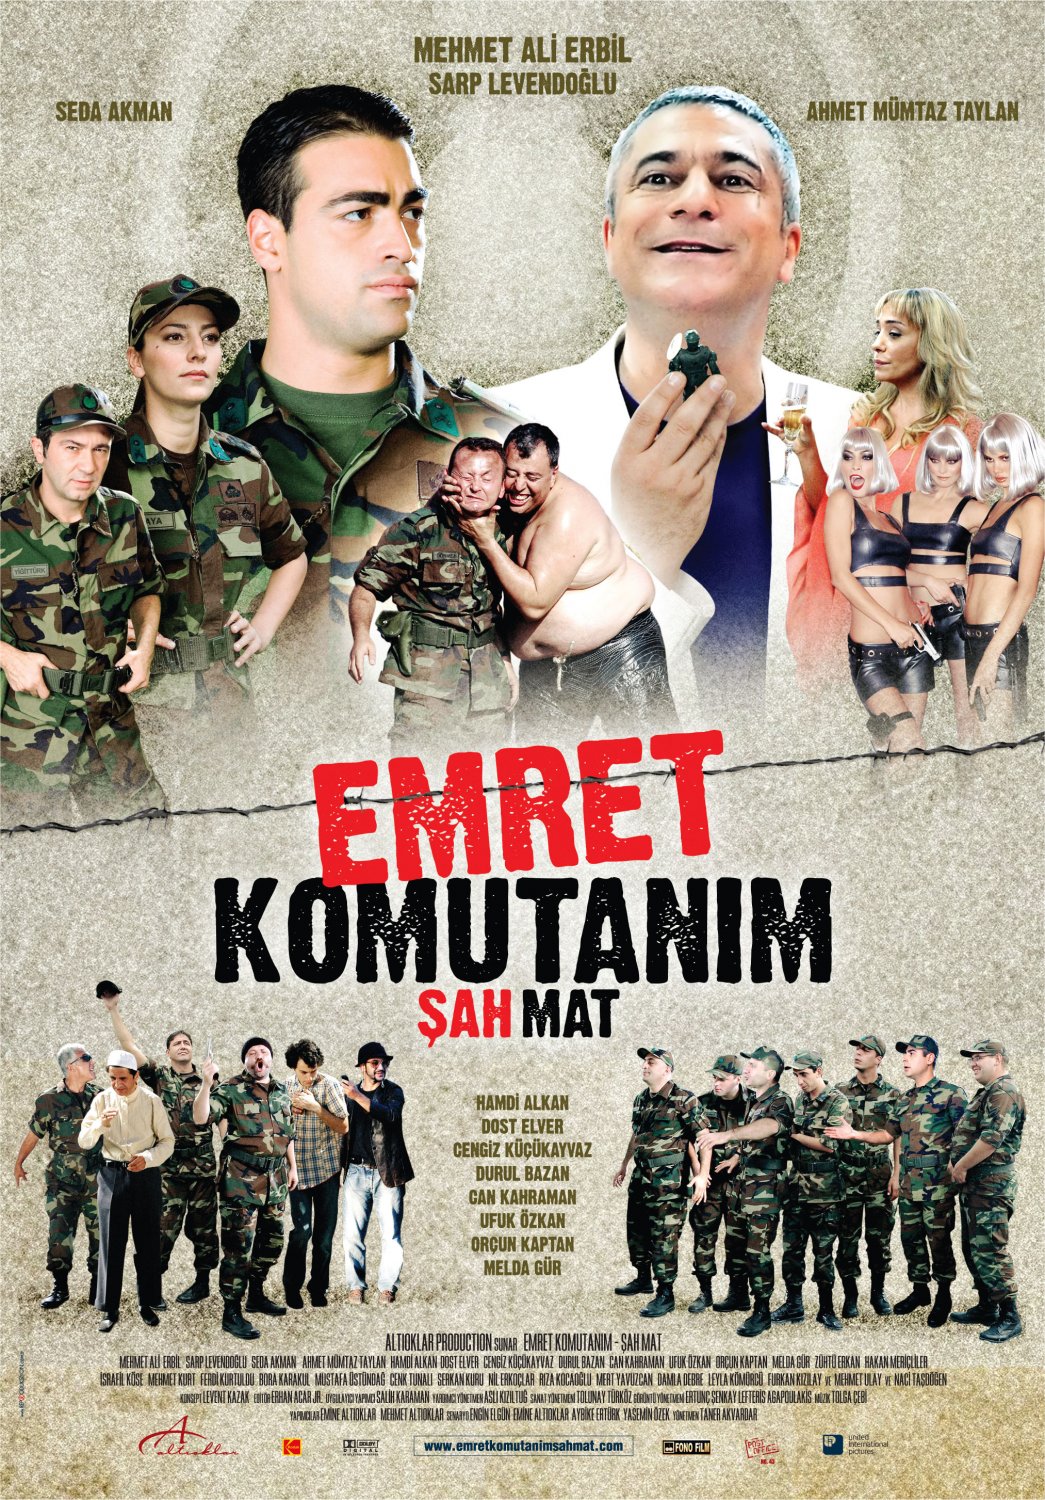 Extra Large Movie Poster Image for Emret komutanim: Sah mat 